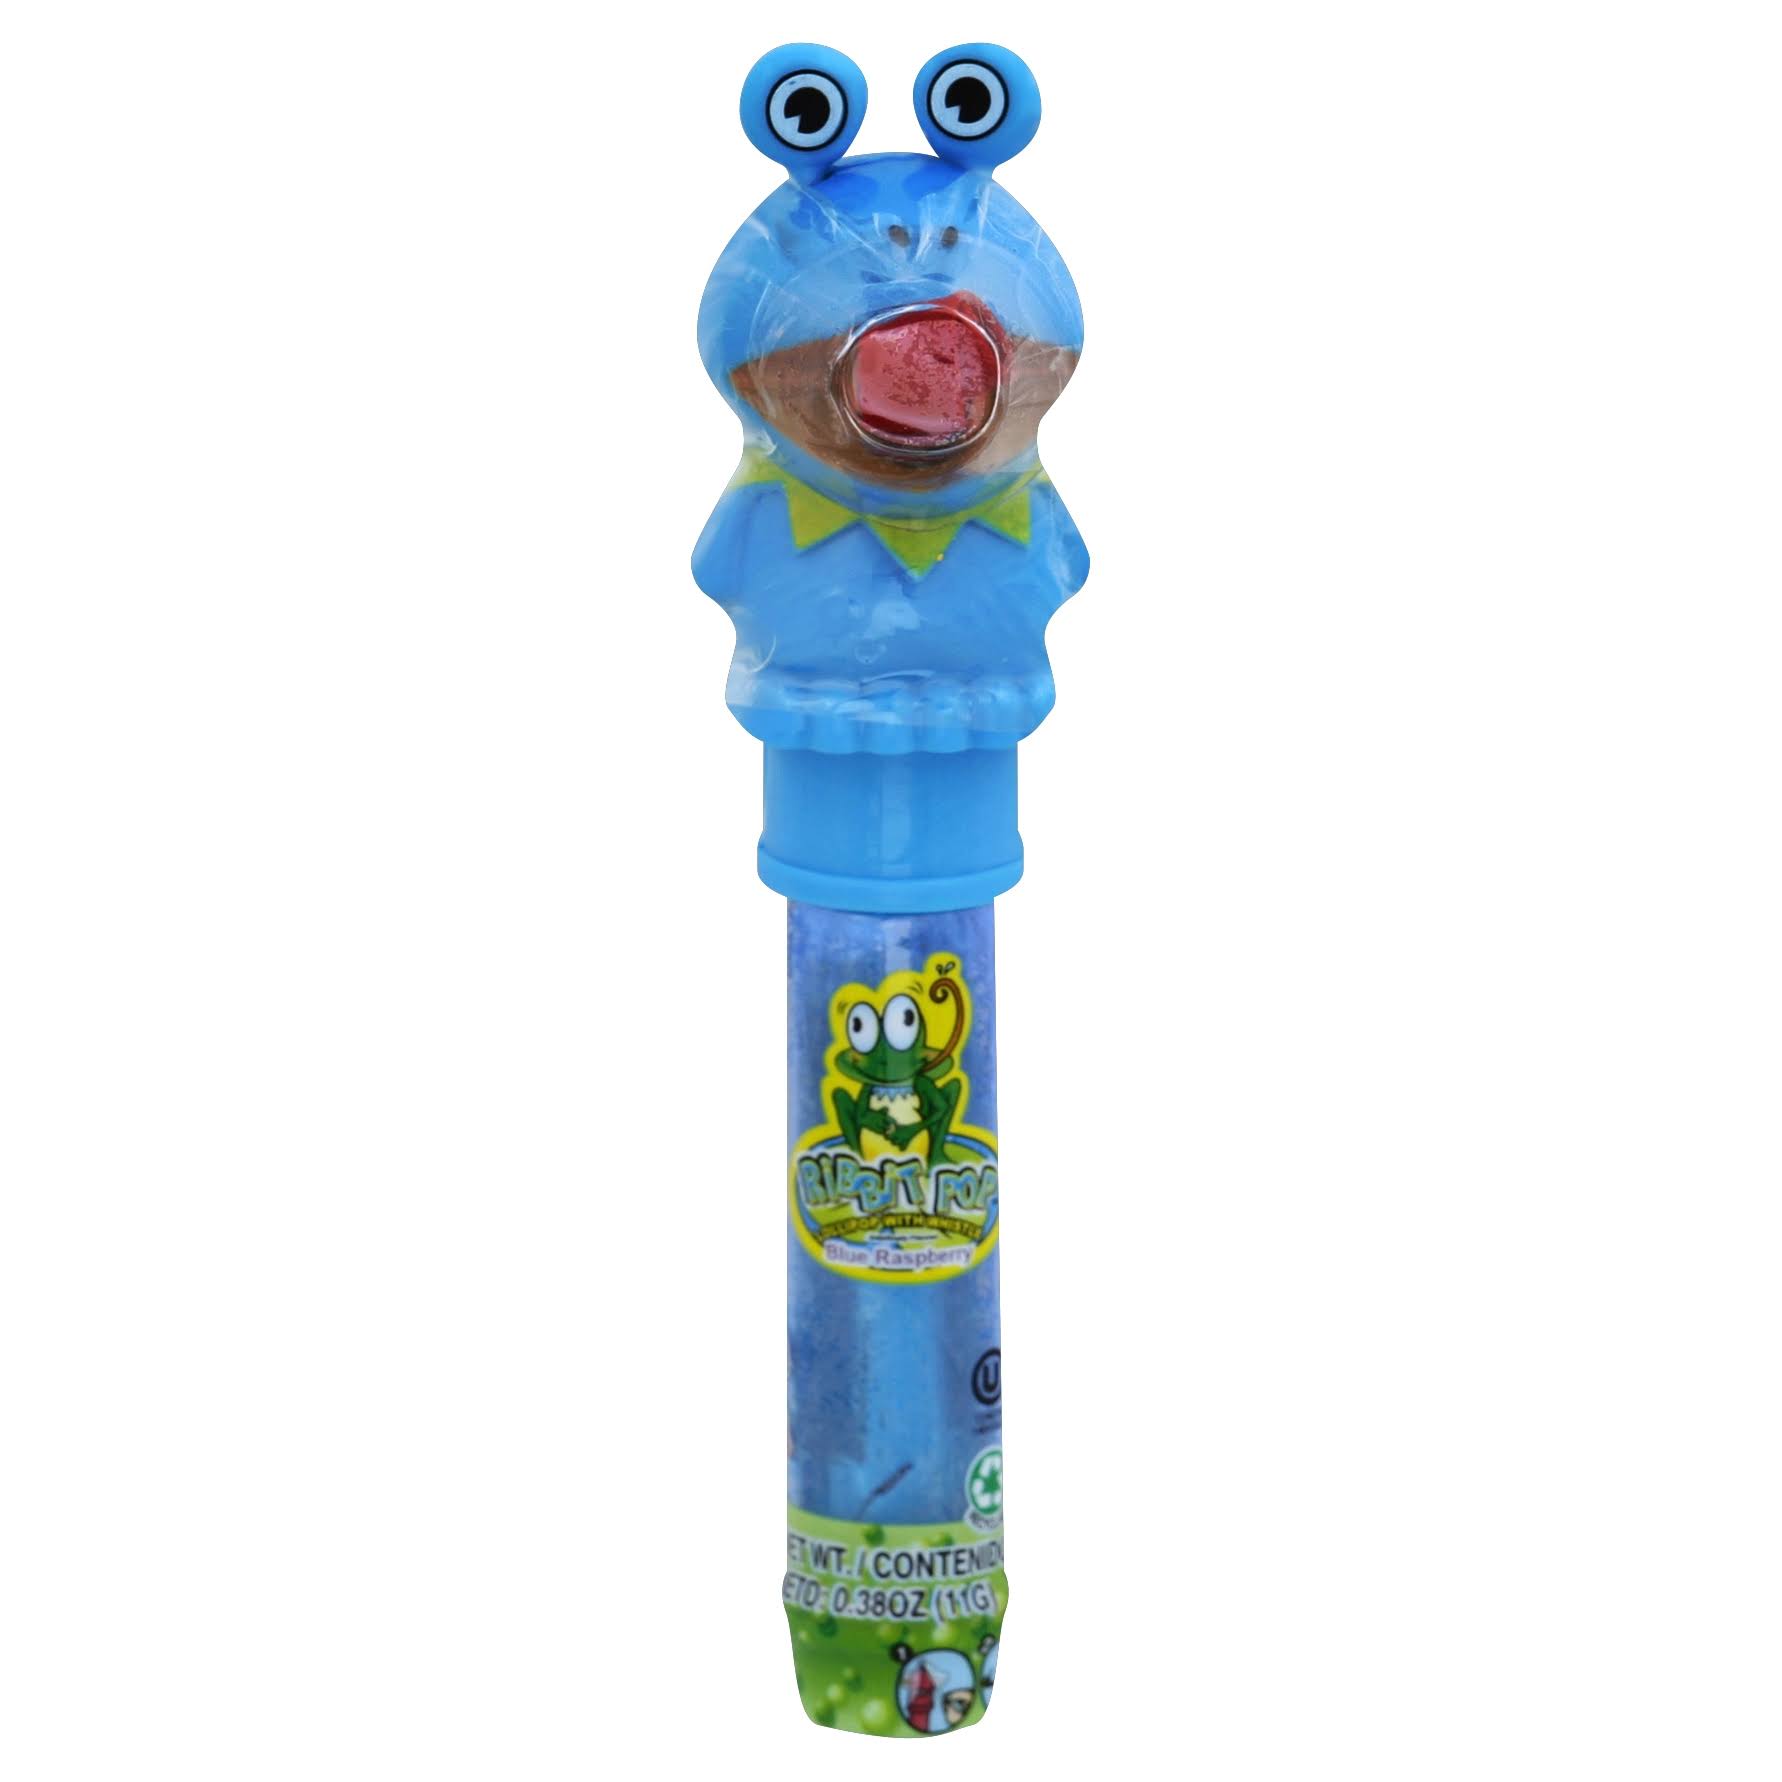 Kidsmania Ribbit Pop Lollipop - with Whistle, 0.38oz